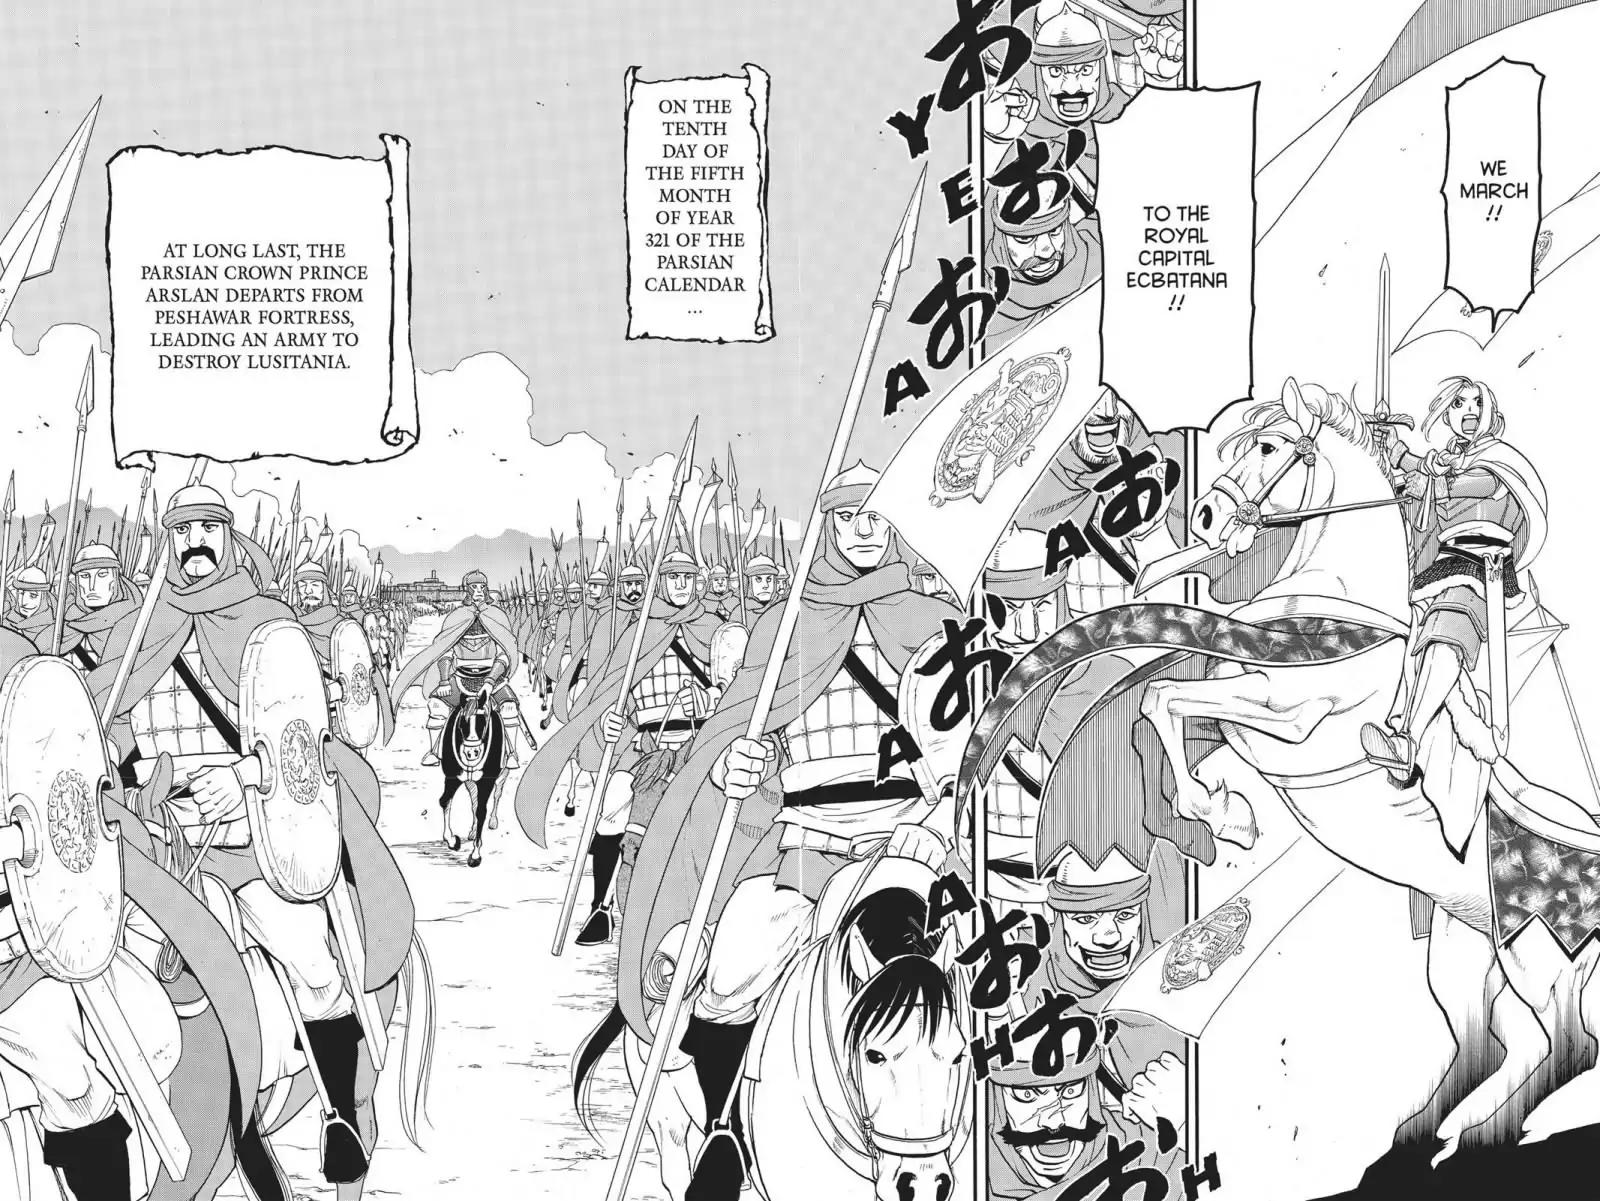 Arslan Senki (ARAKAWA Hiromu) Chapter 66: